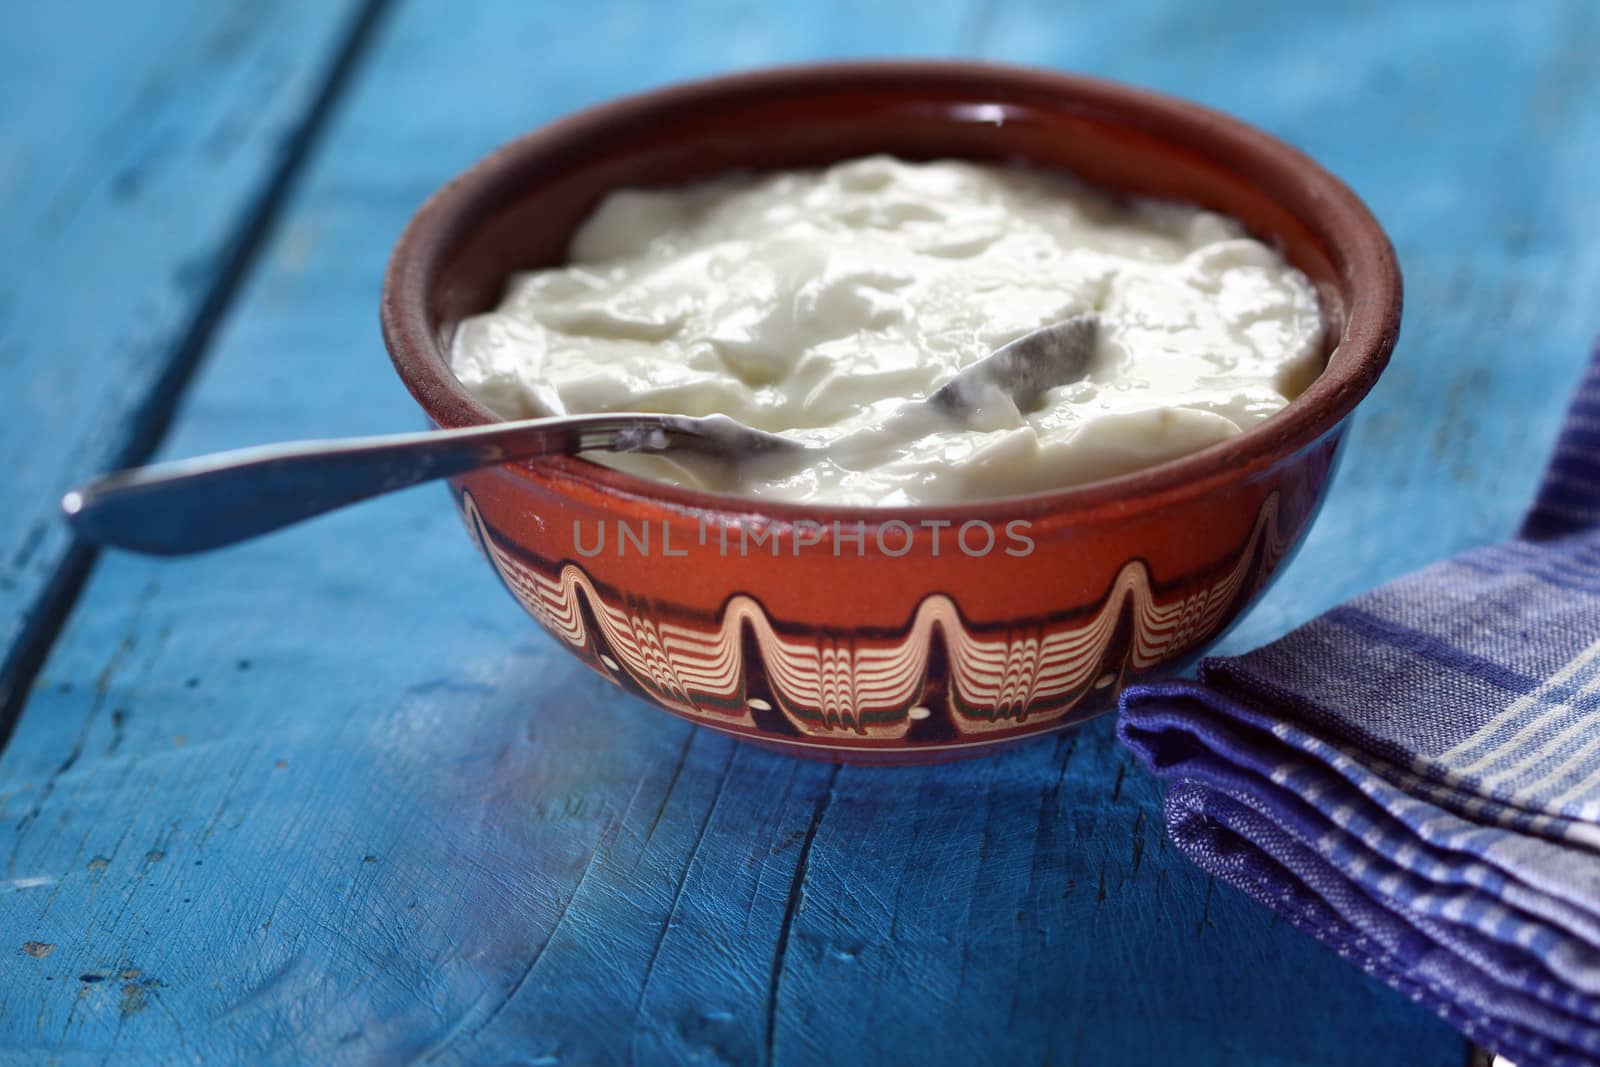 Homemade yogurt in a ceramic bowl and spoon